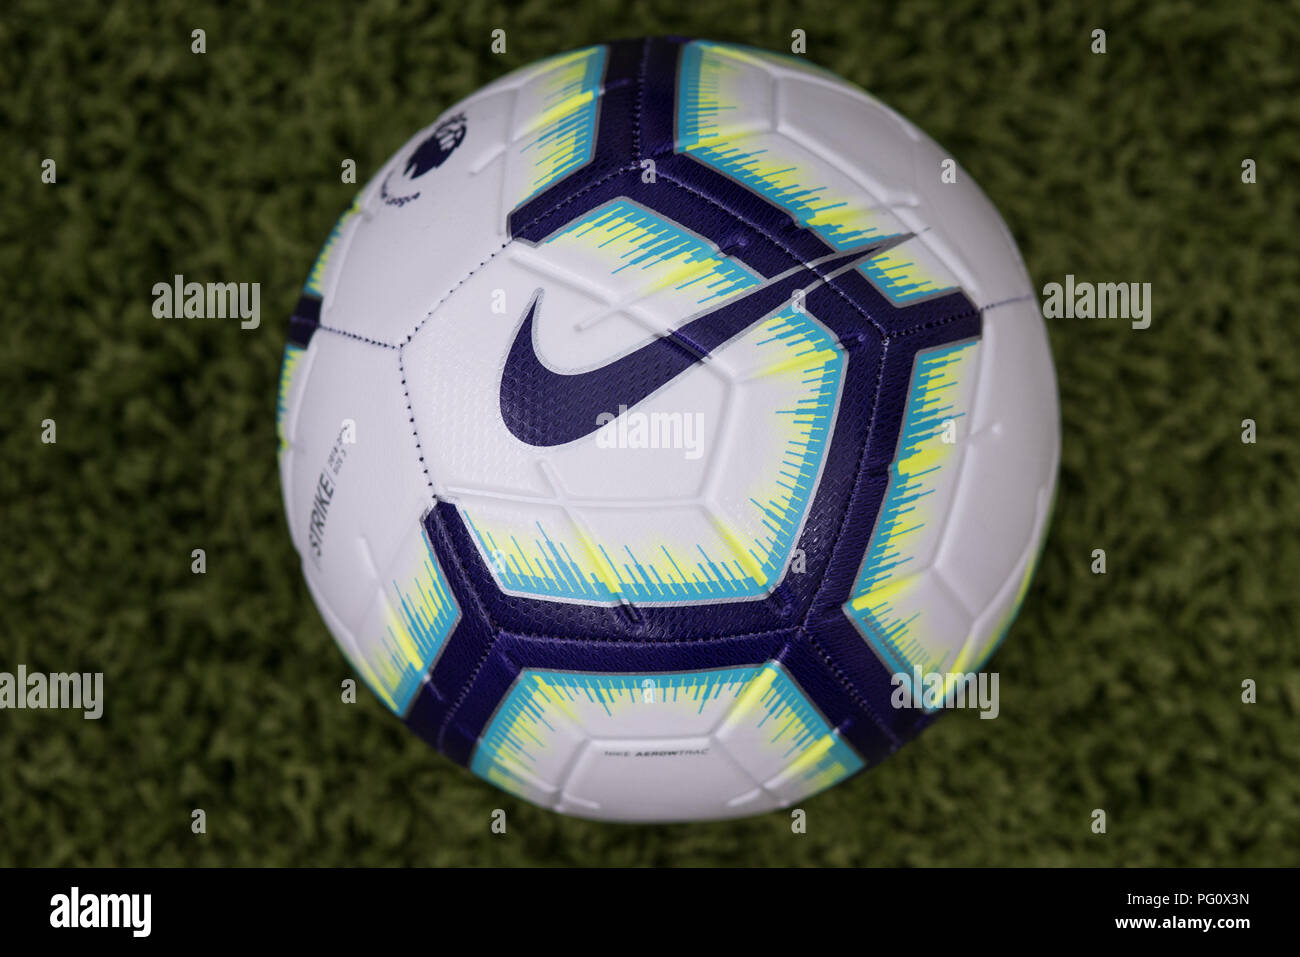 Merlin Nike ball pour cette saison 2018/19 Photo Stock - Alamy